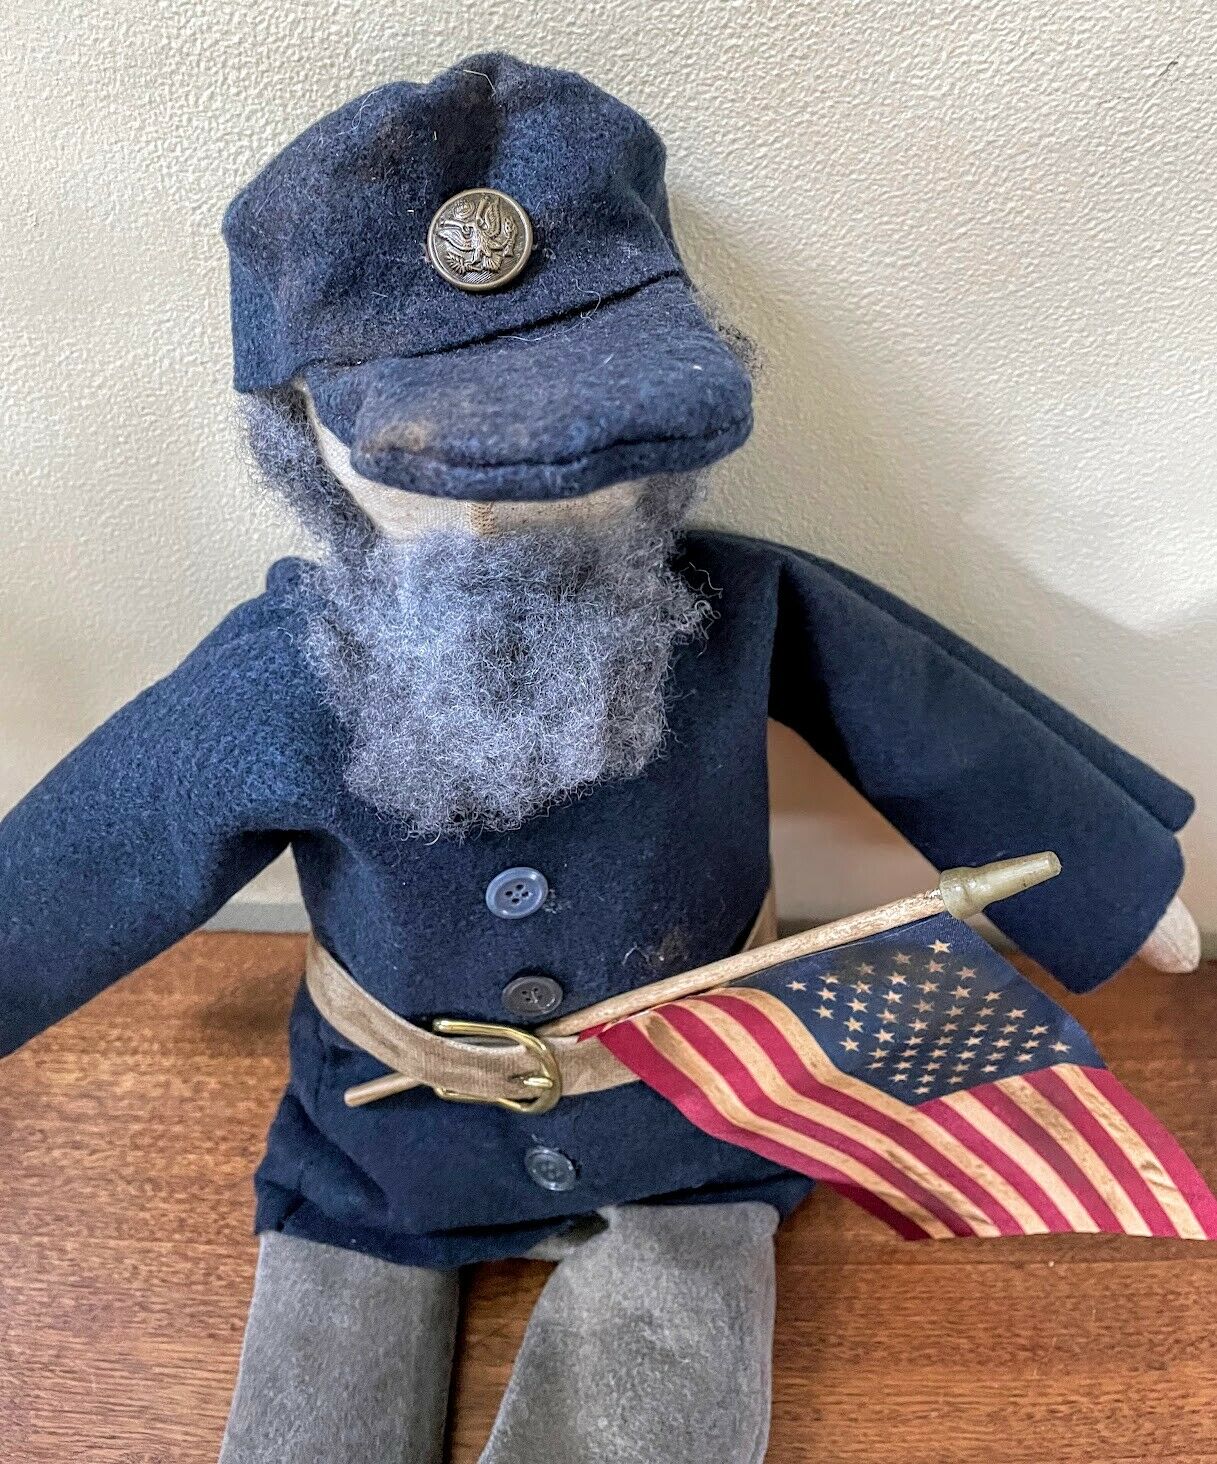 Primitive Americana Patriotic Americana Civil War Union Soldier Doll - The Primitive Pineapple Collection